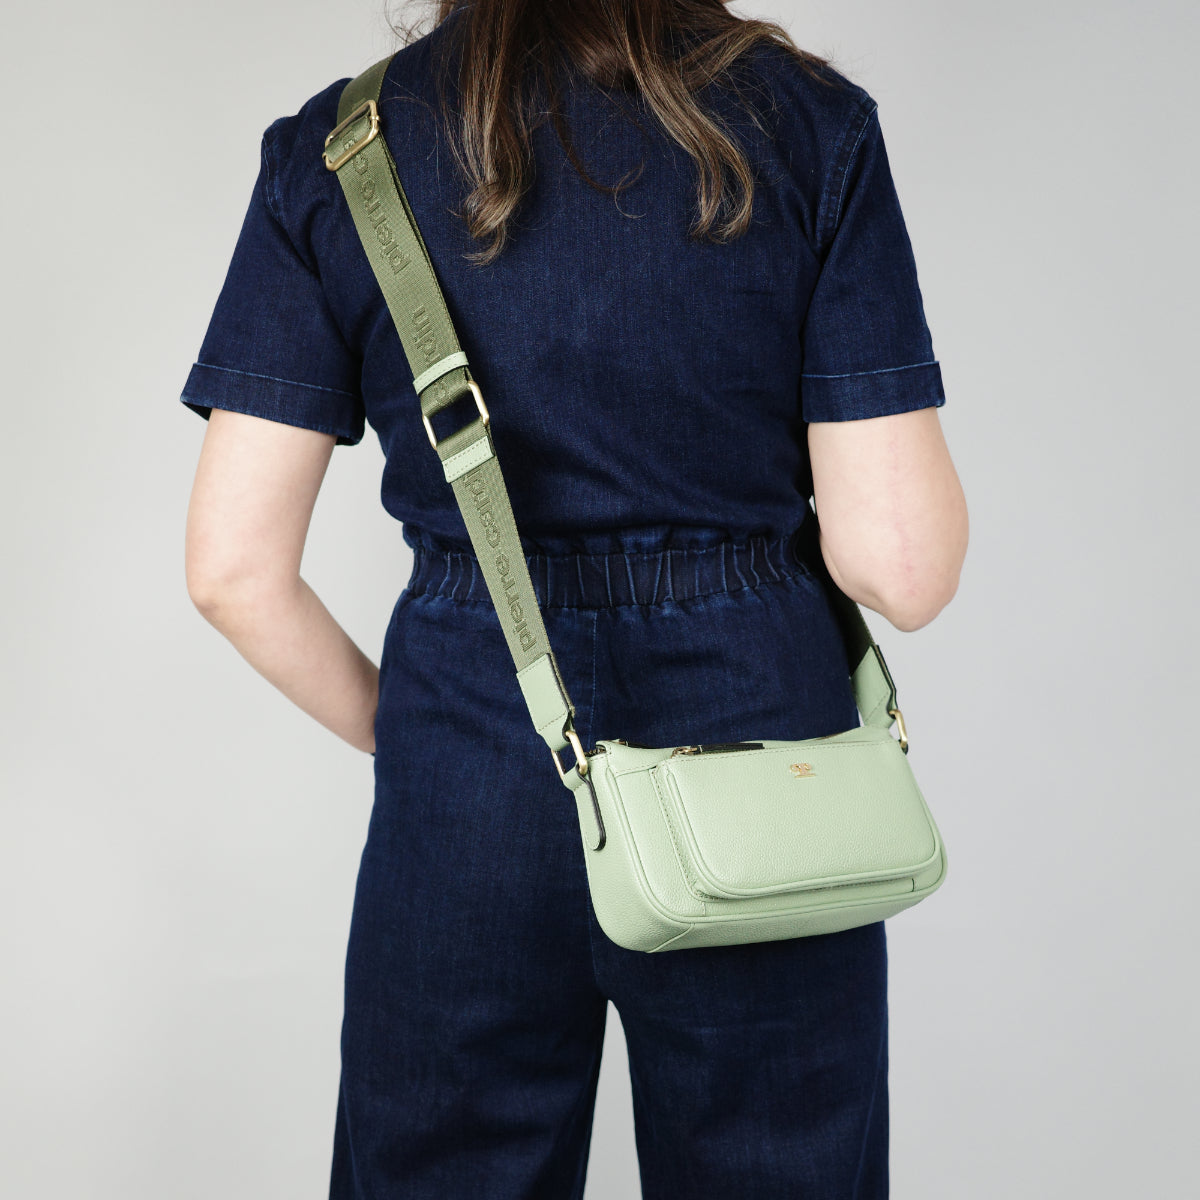 Pierre Cardin Ladies Leather Cross-Body Bag in Jade